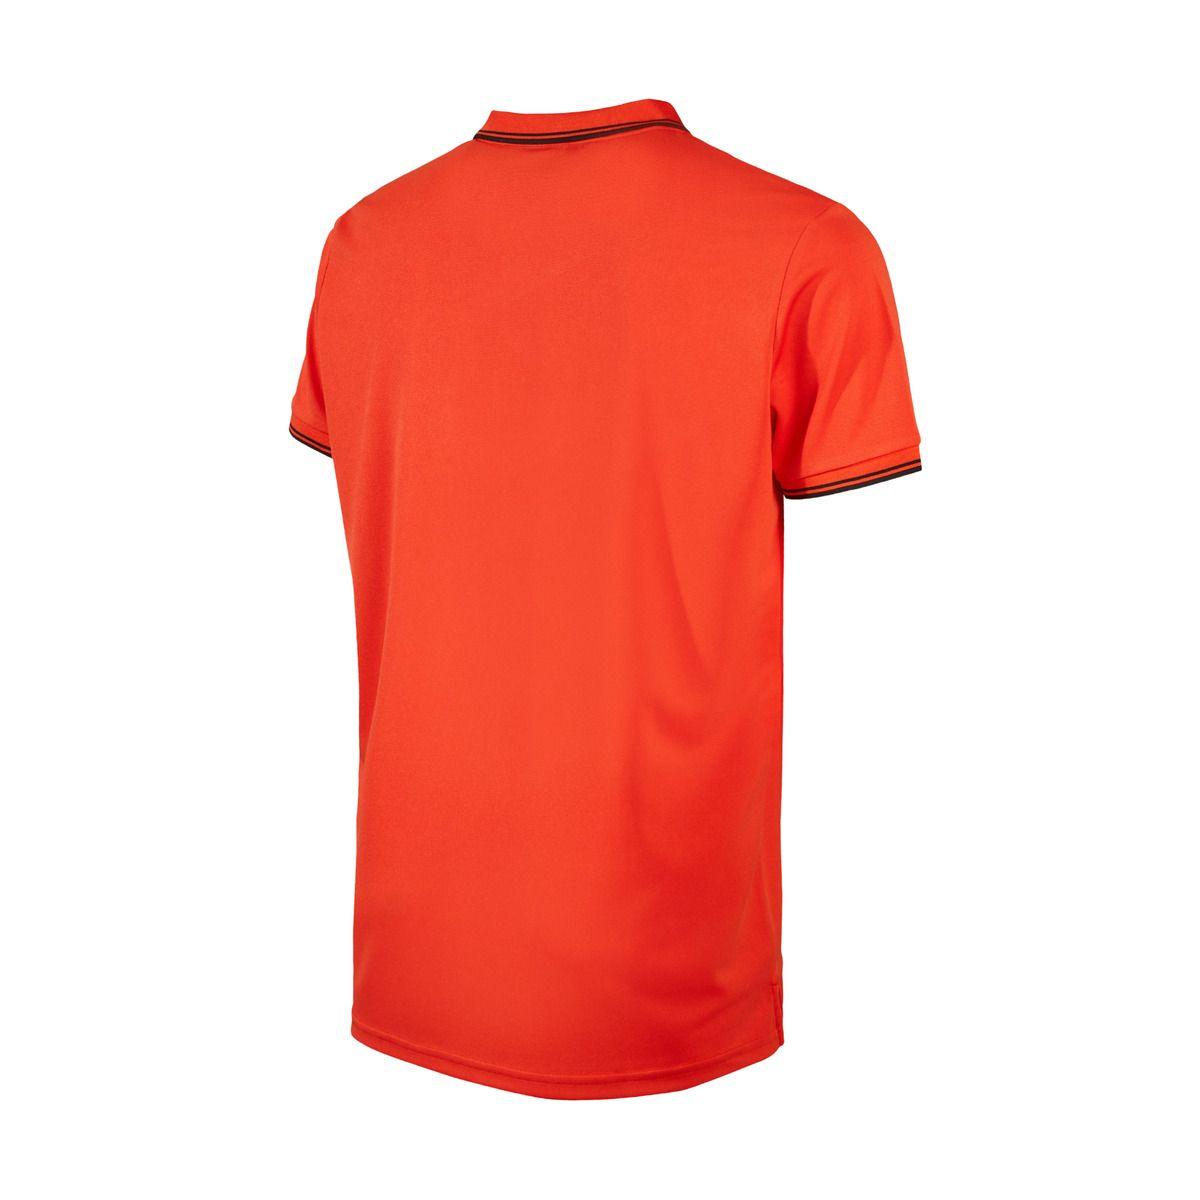 Red Boomerang Clothing Logo - Boomerang men's polo shirt A24321940 | eBay